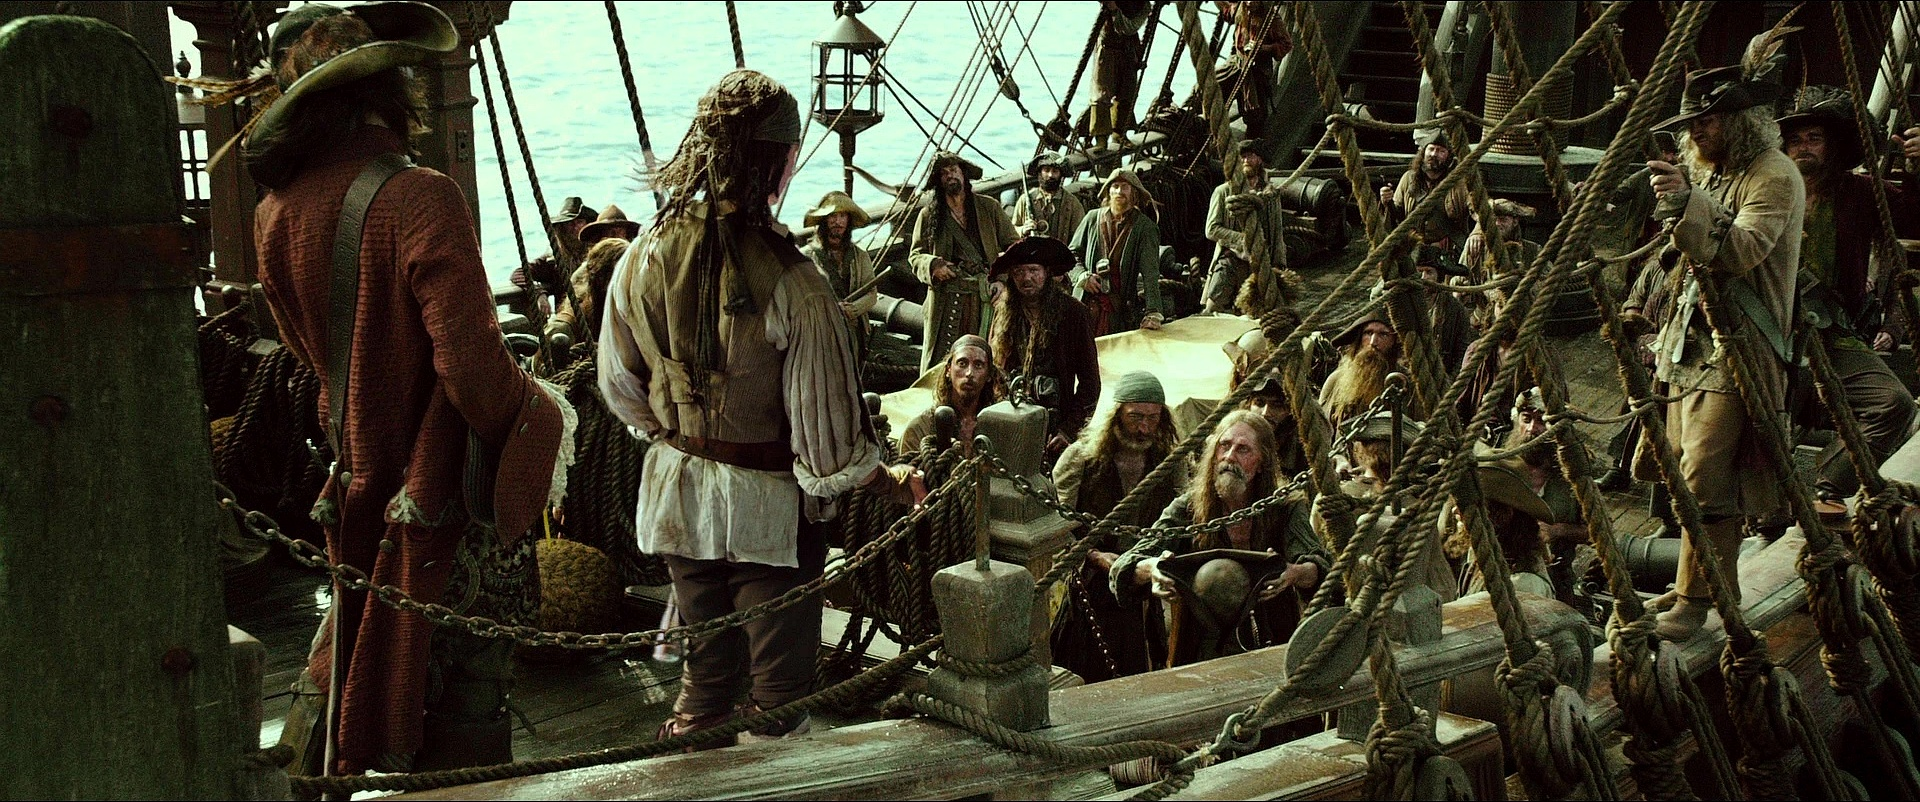 Jack Sparrow's crew | Pirates of the Caribbean Wiki | Fandom